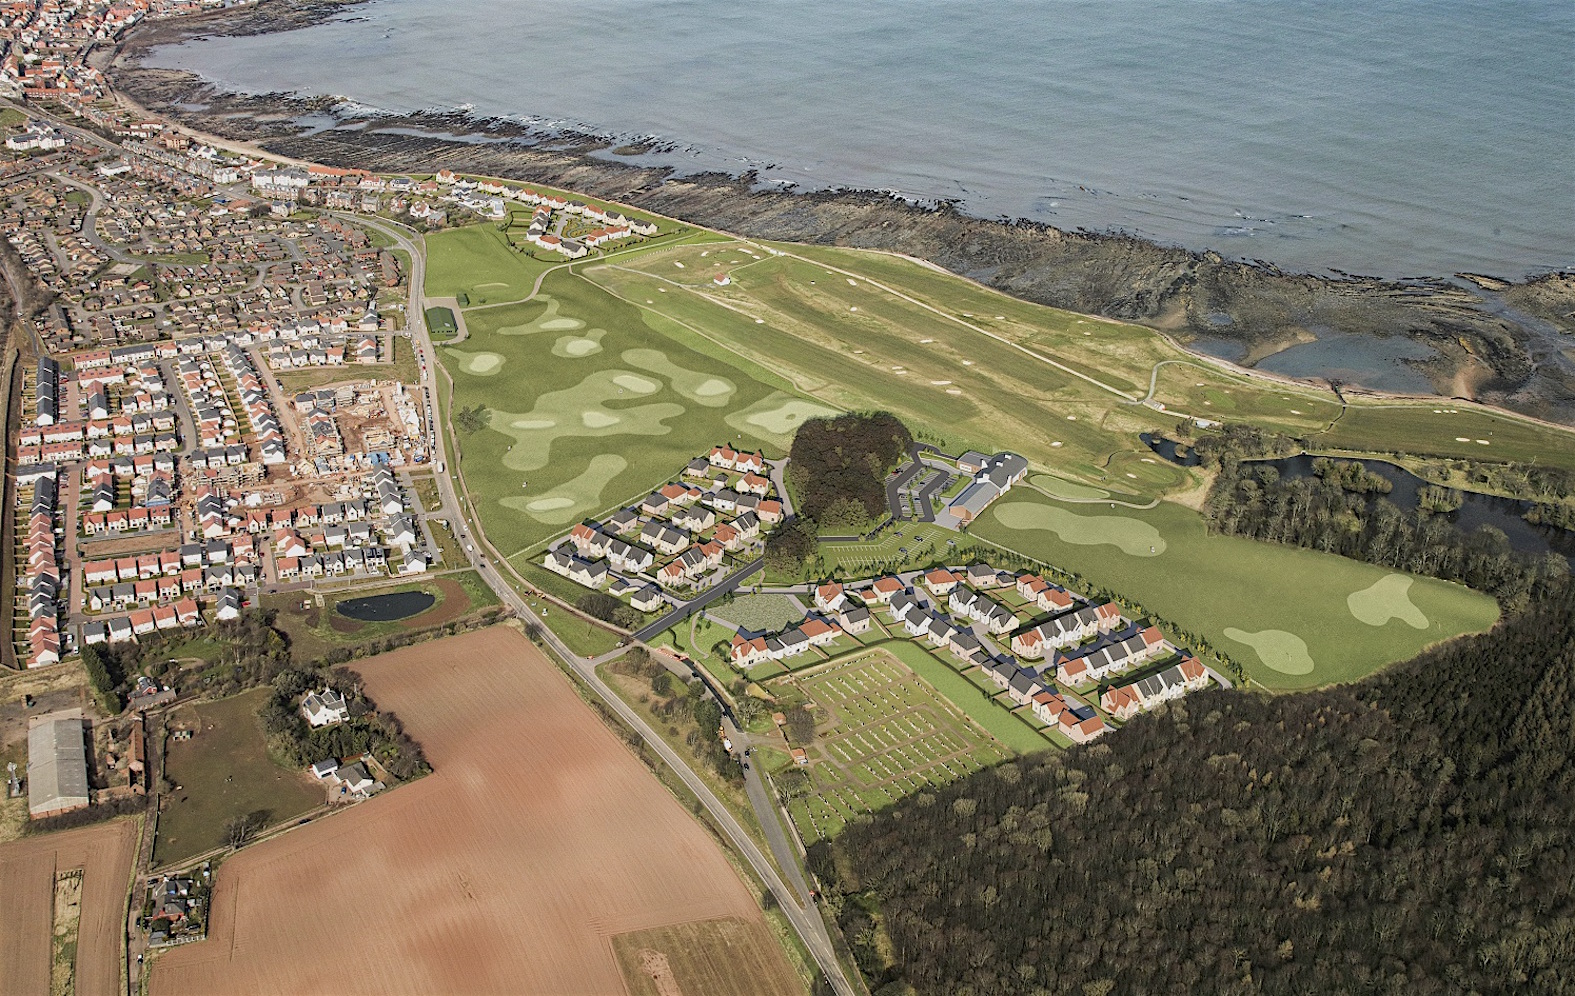 An artist's impression of the Dunbar Golf Club redevelopment scheme